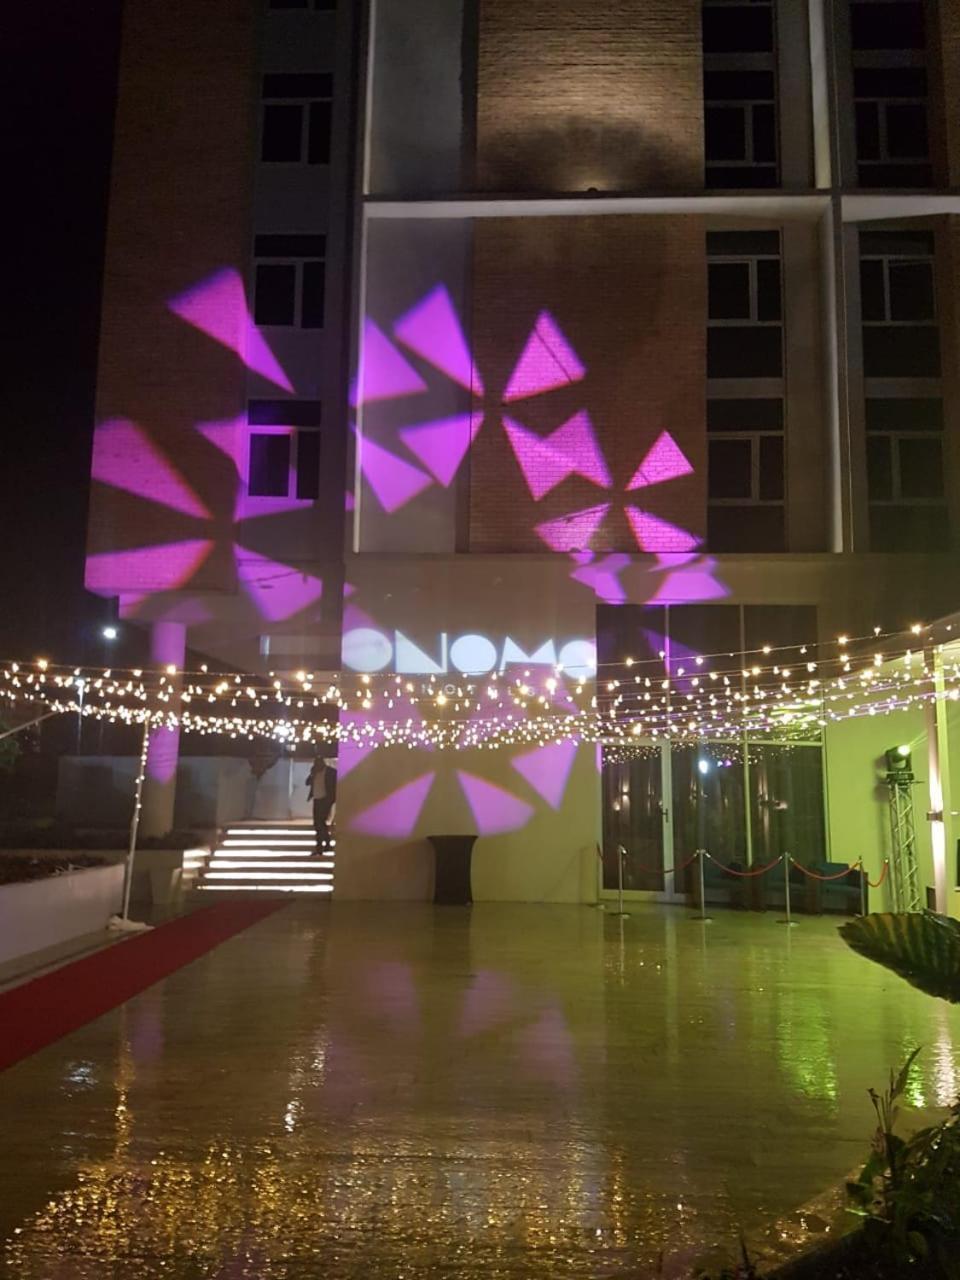 ONOMO Hotel Durban Buitenkant foto